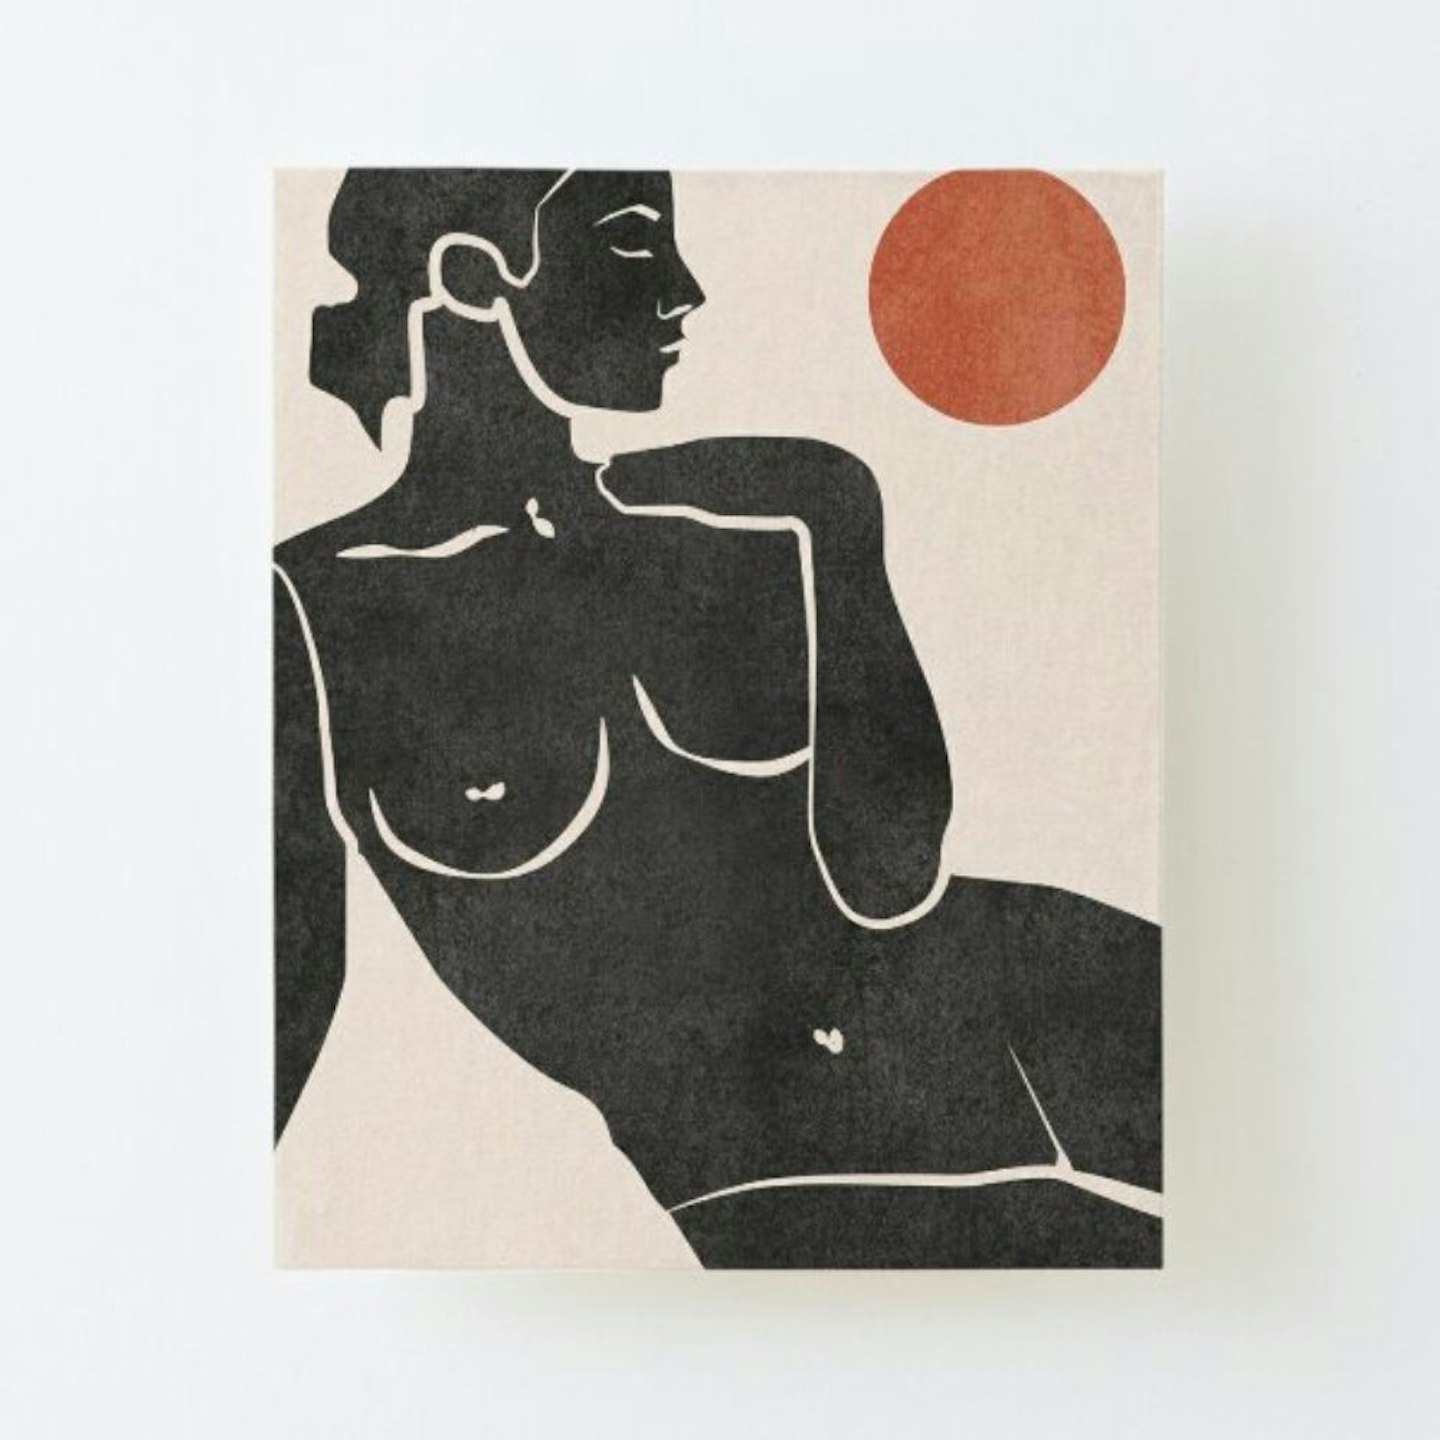 Nude Art Print